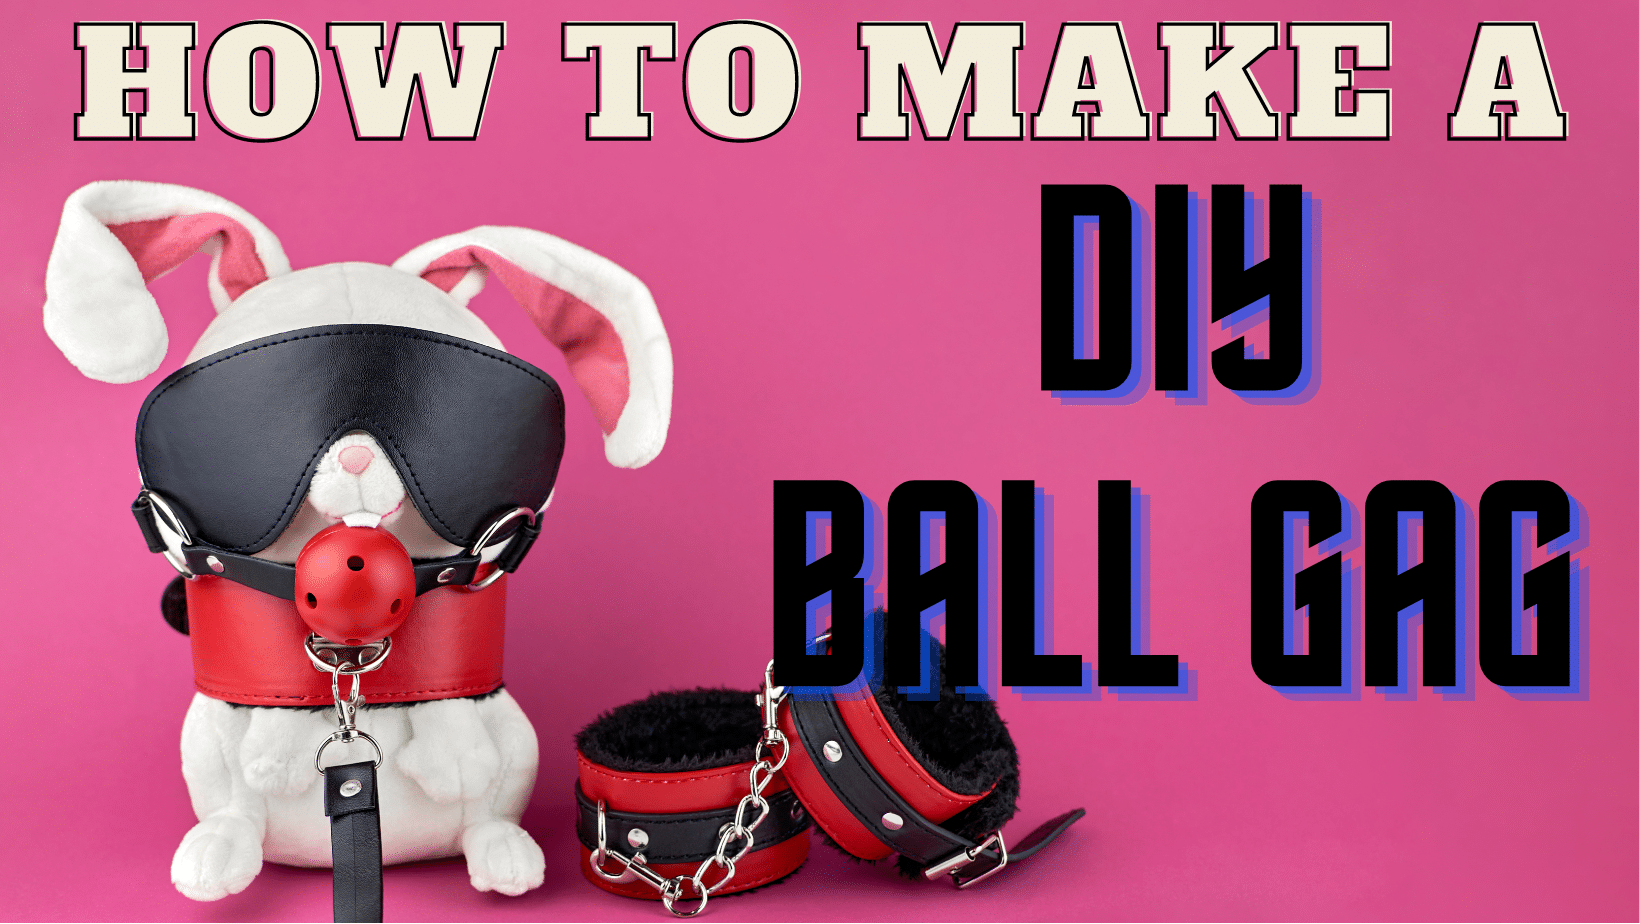 How to Make a DIY Ball Gag